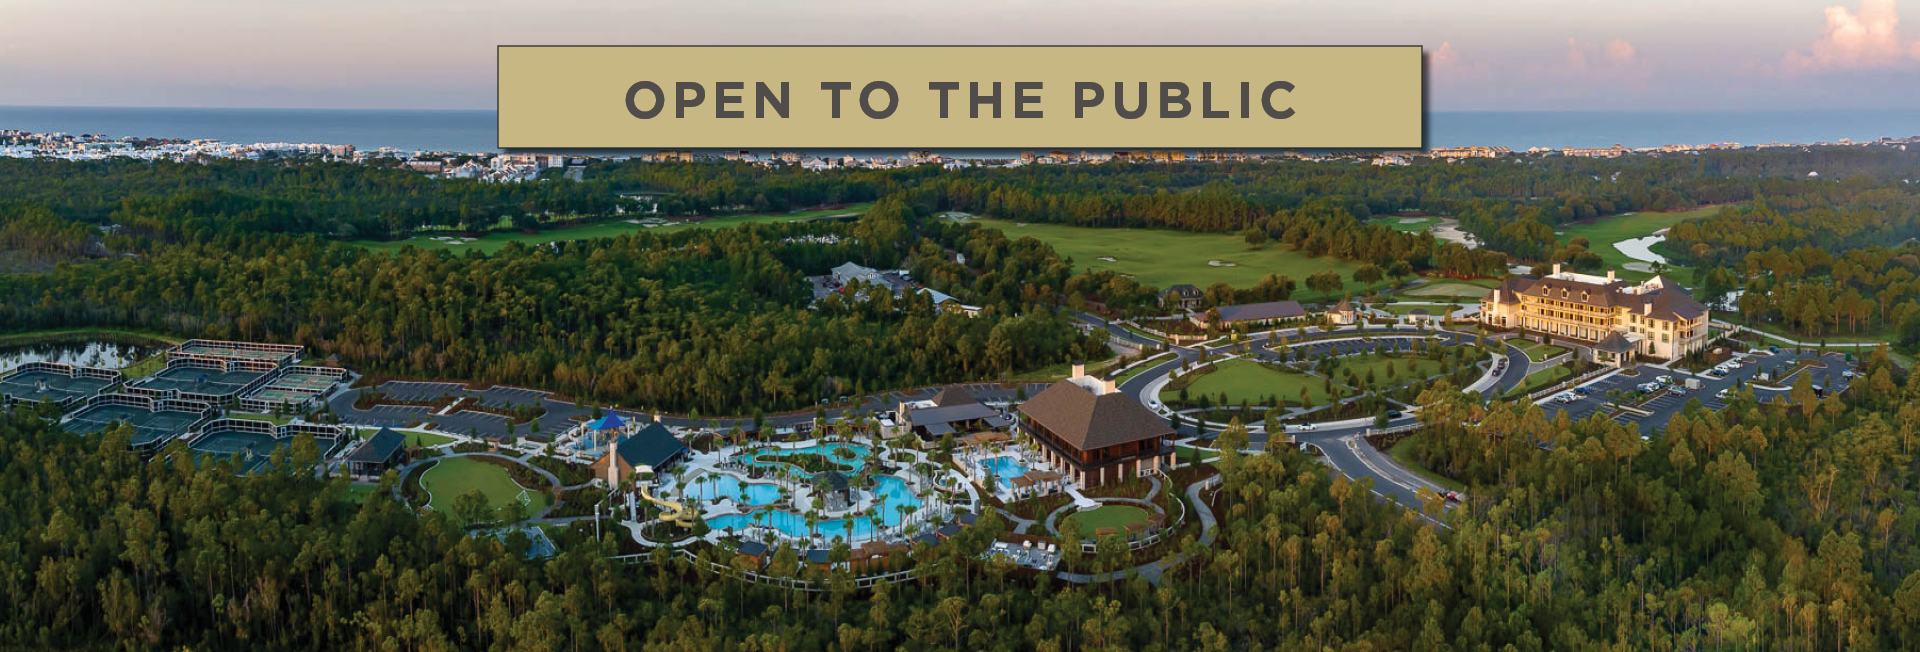 Aerial view of Camp Creek Inn and amenities